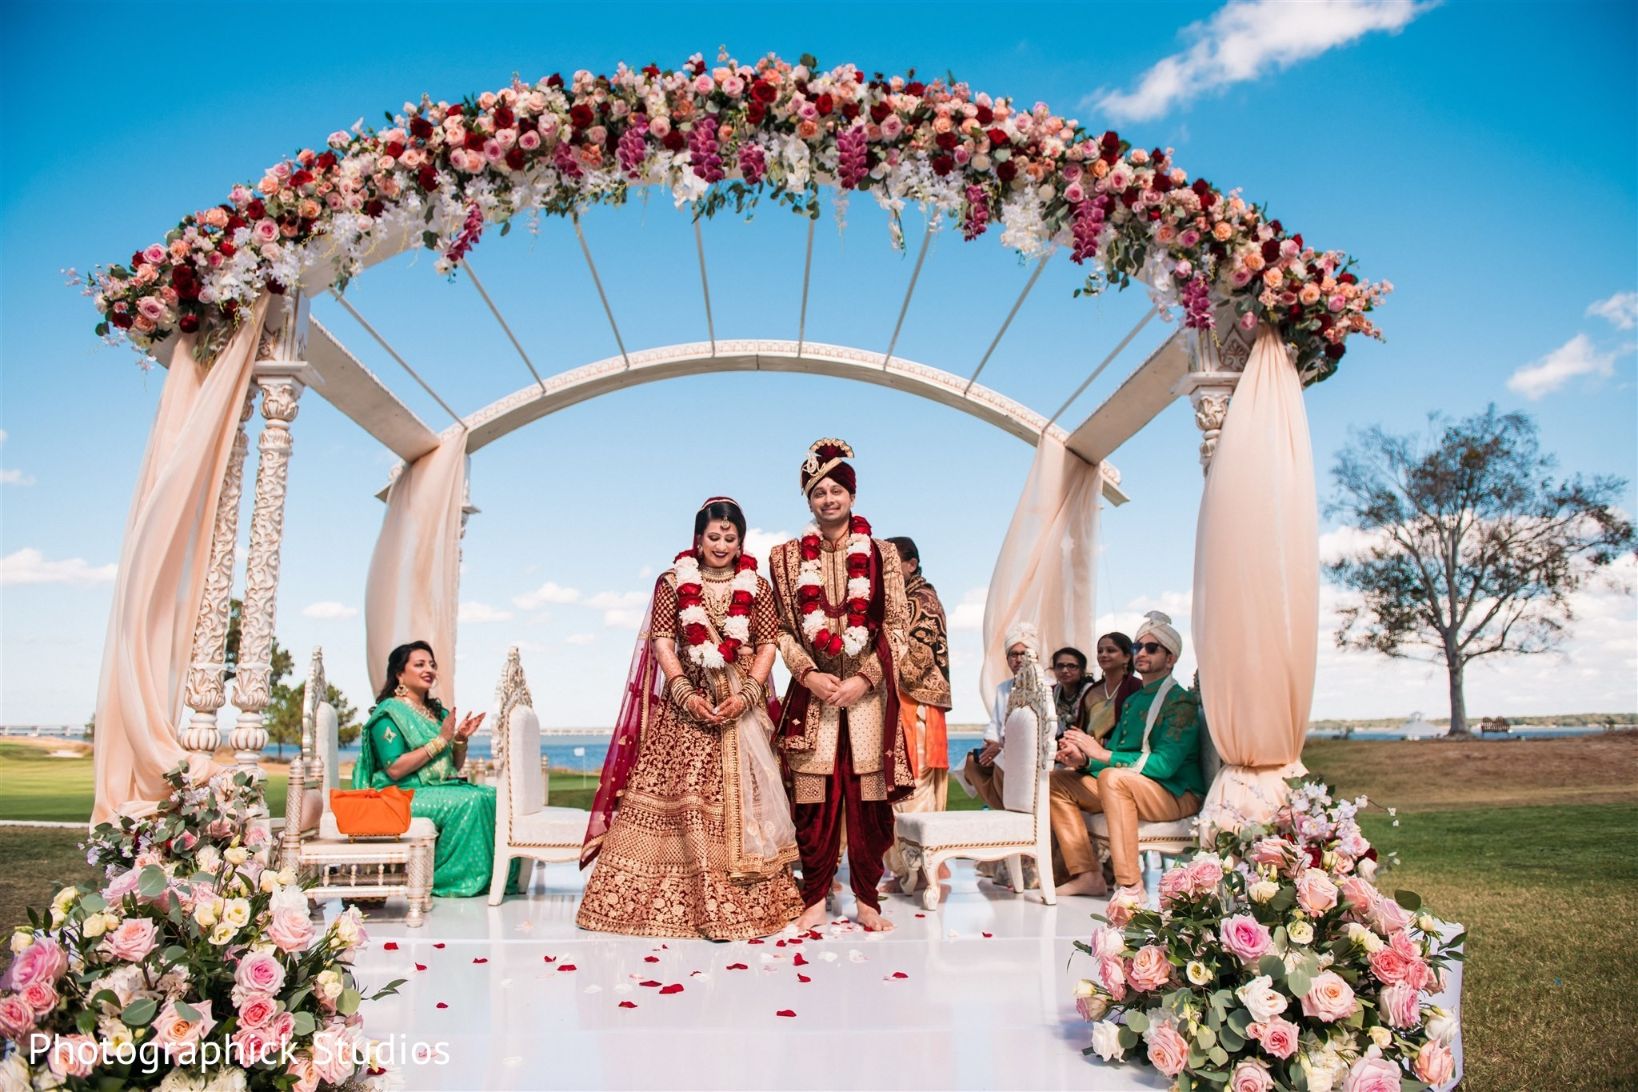 Indian wedding decoration - Mandap/Stage